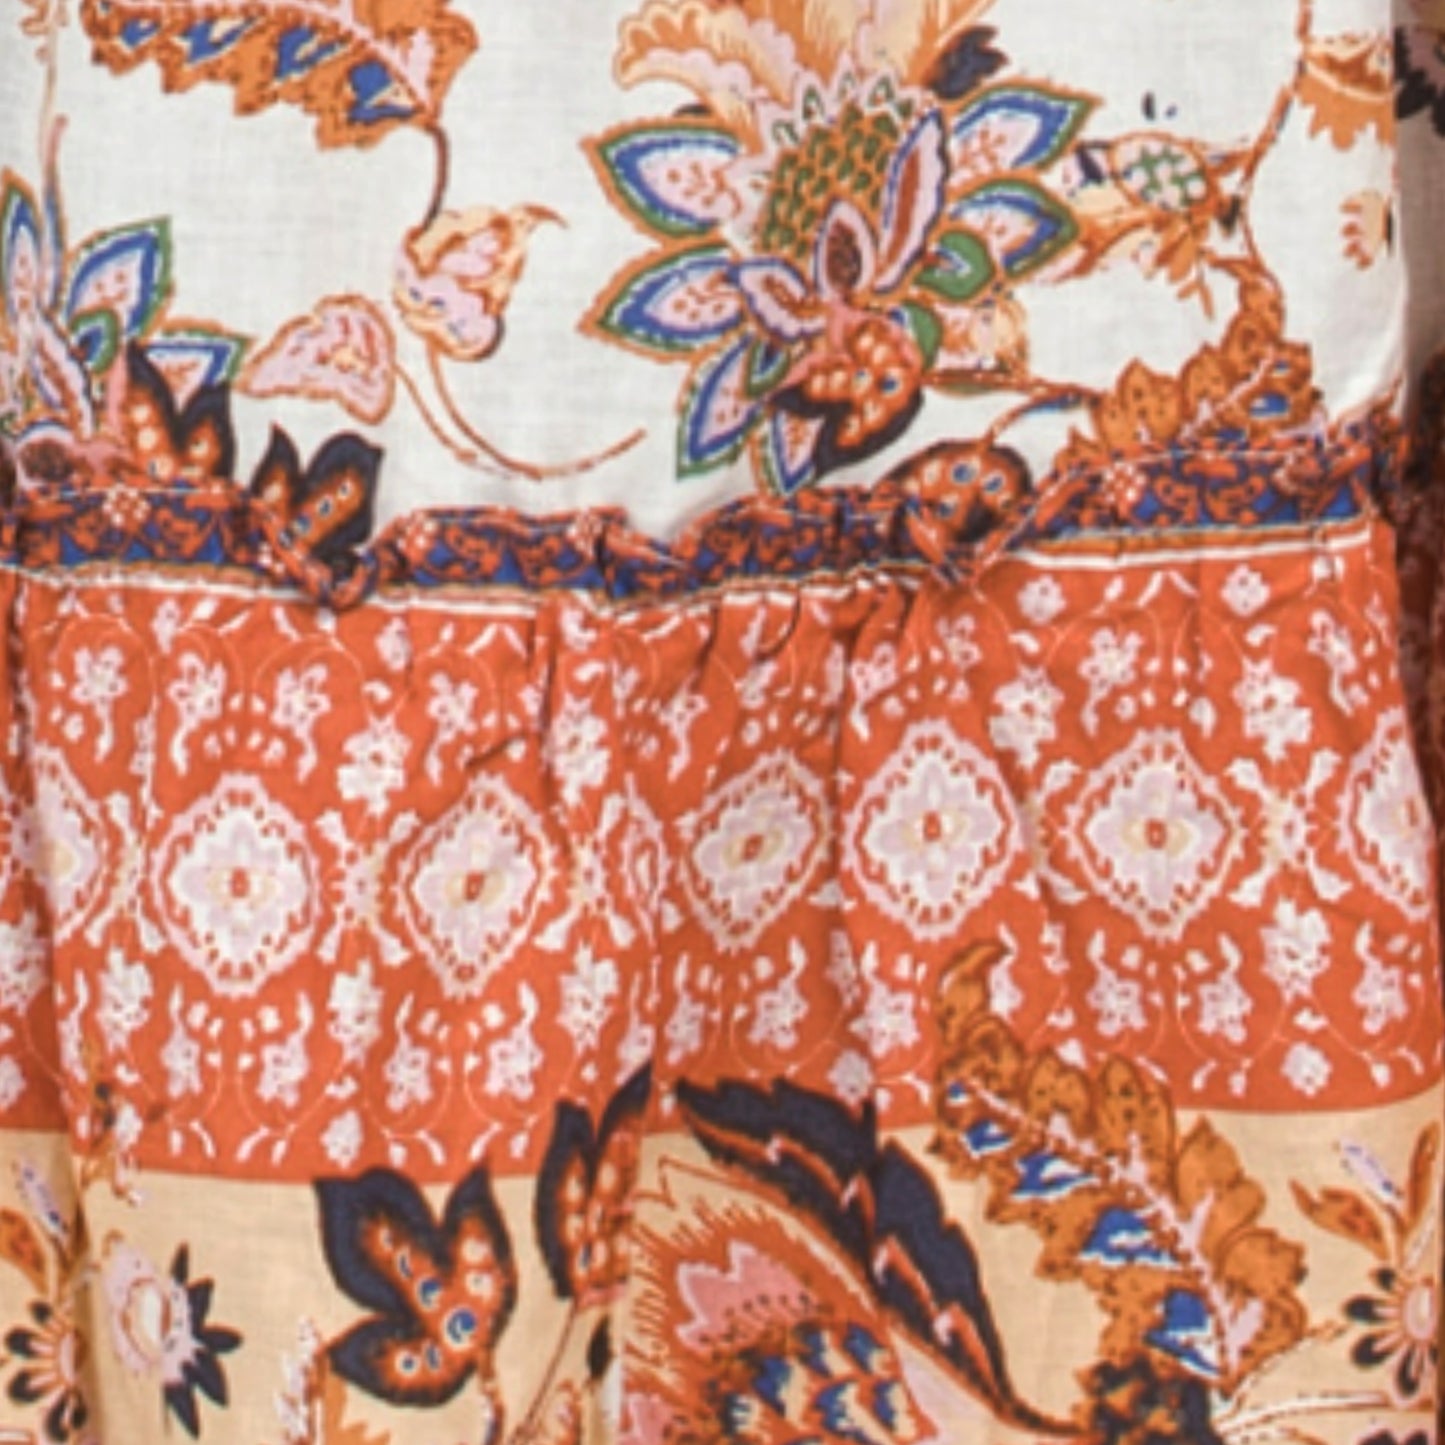 RACHEL RACHEL ROY Women's Linen Belted Floral Print Midi Skirt